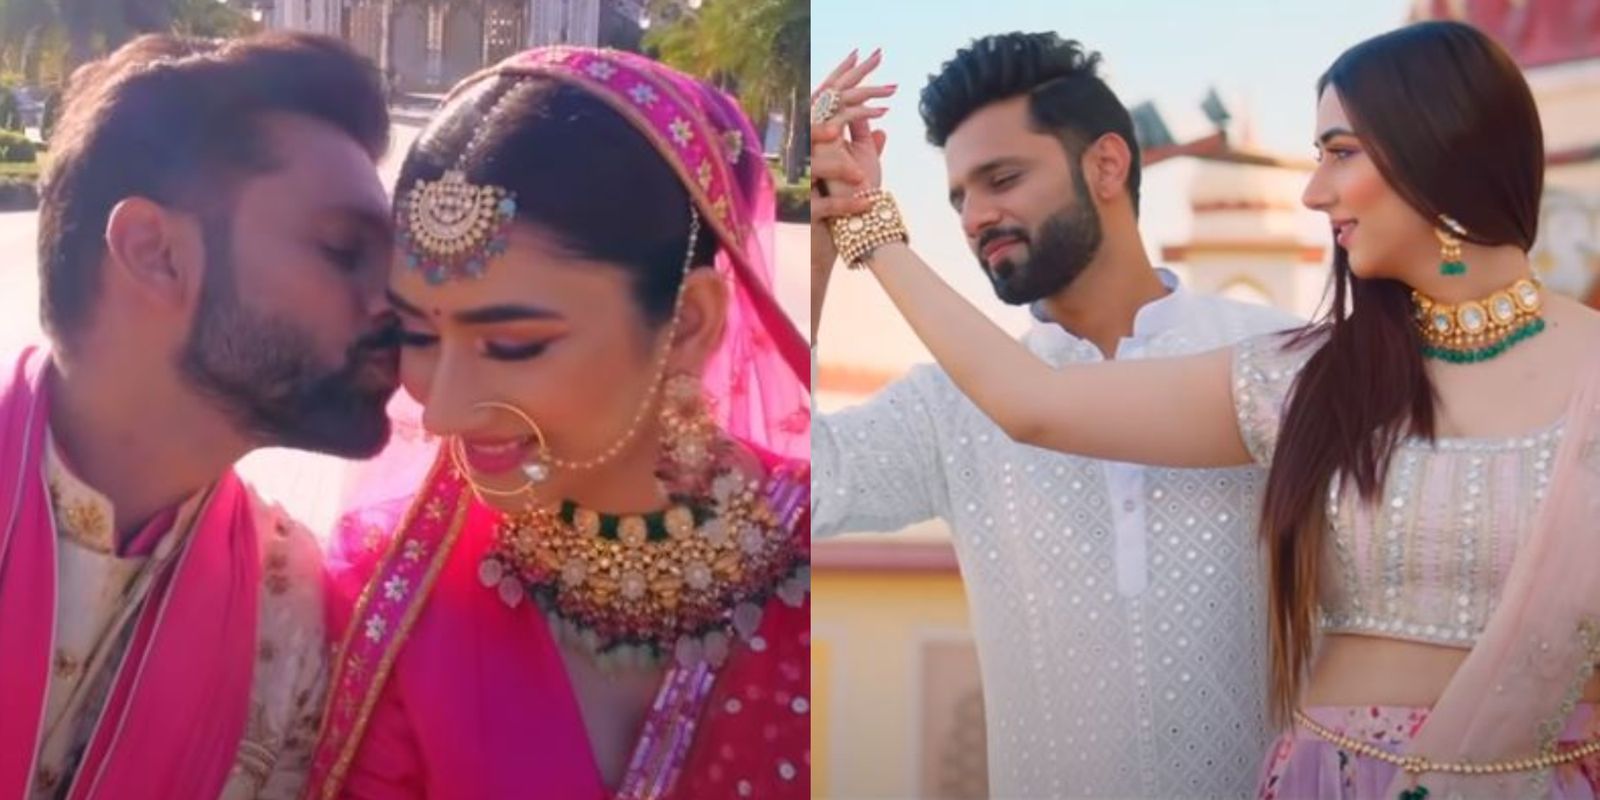 Madhanya: Rahul Vaidya And Disha Parmar Give Us A Glimpse Of What Their Wedding May Look Like In This Shaadi Season Special Song